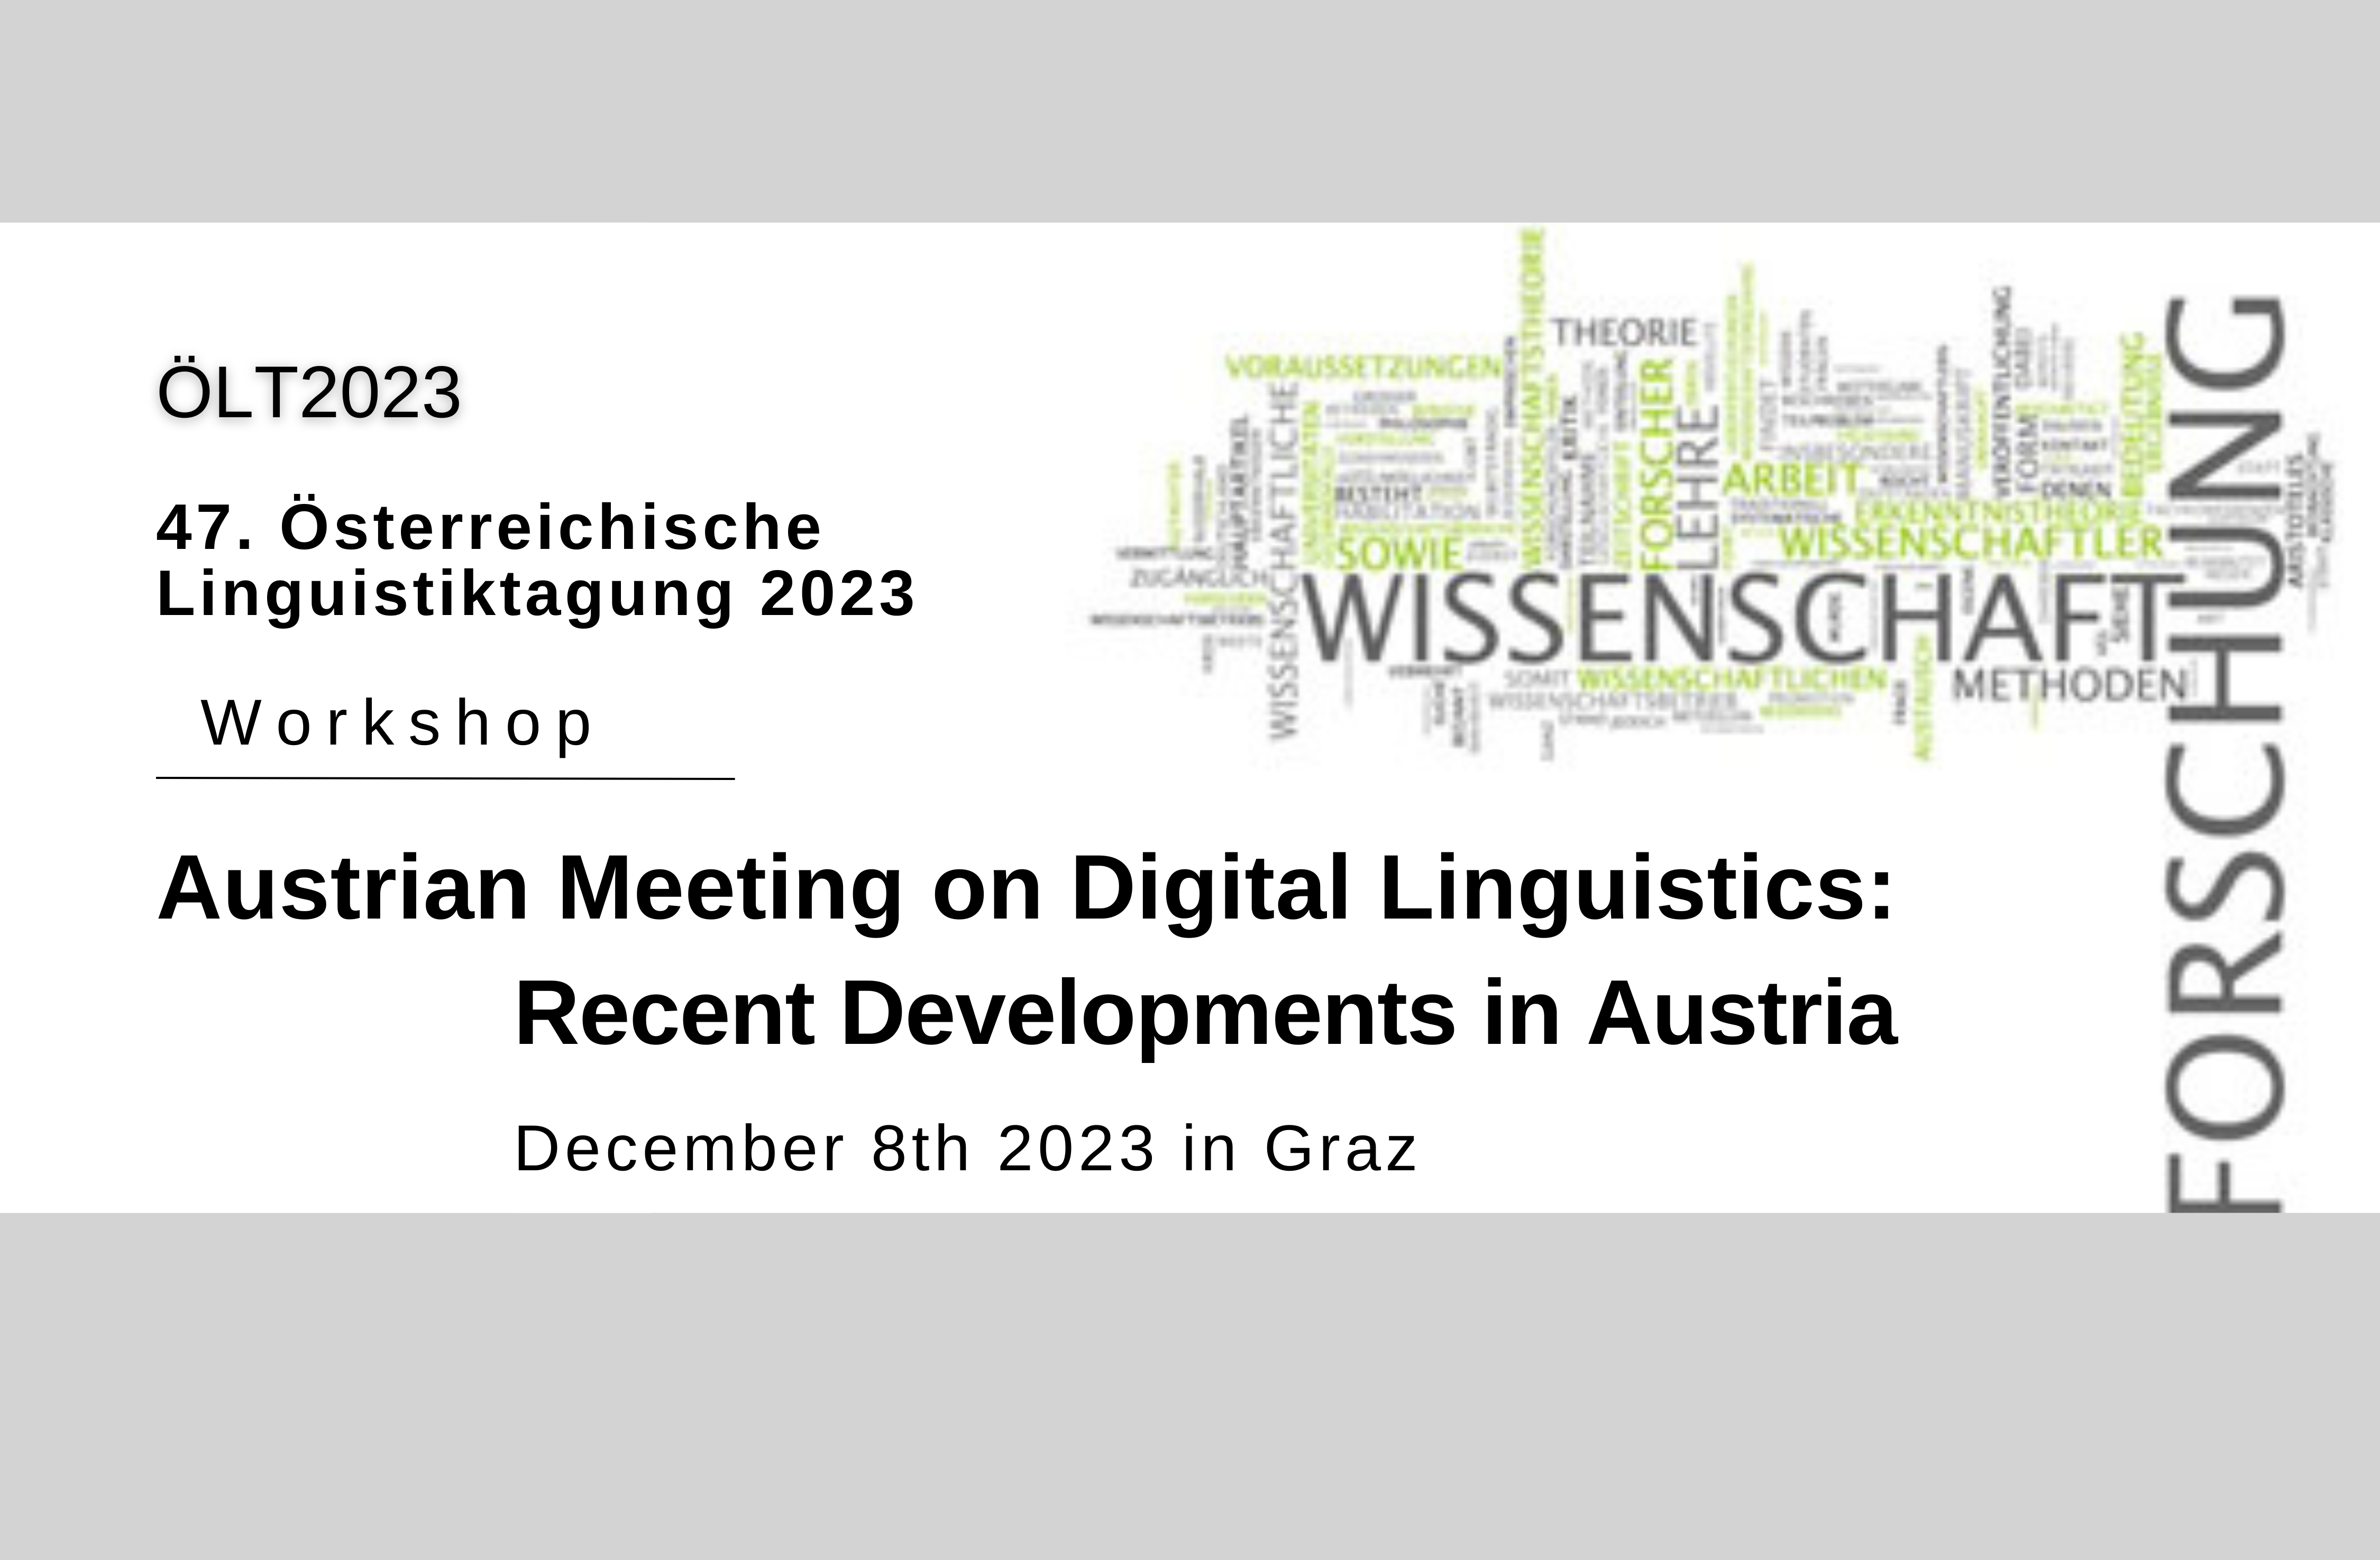 Austrian Meeting on Digital Linguistics: Recent Developments in Austria (at ÖLT 2023)